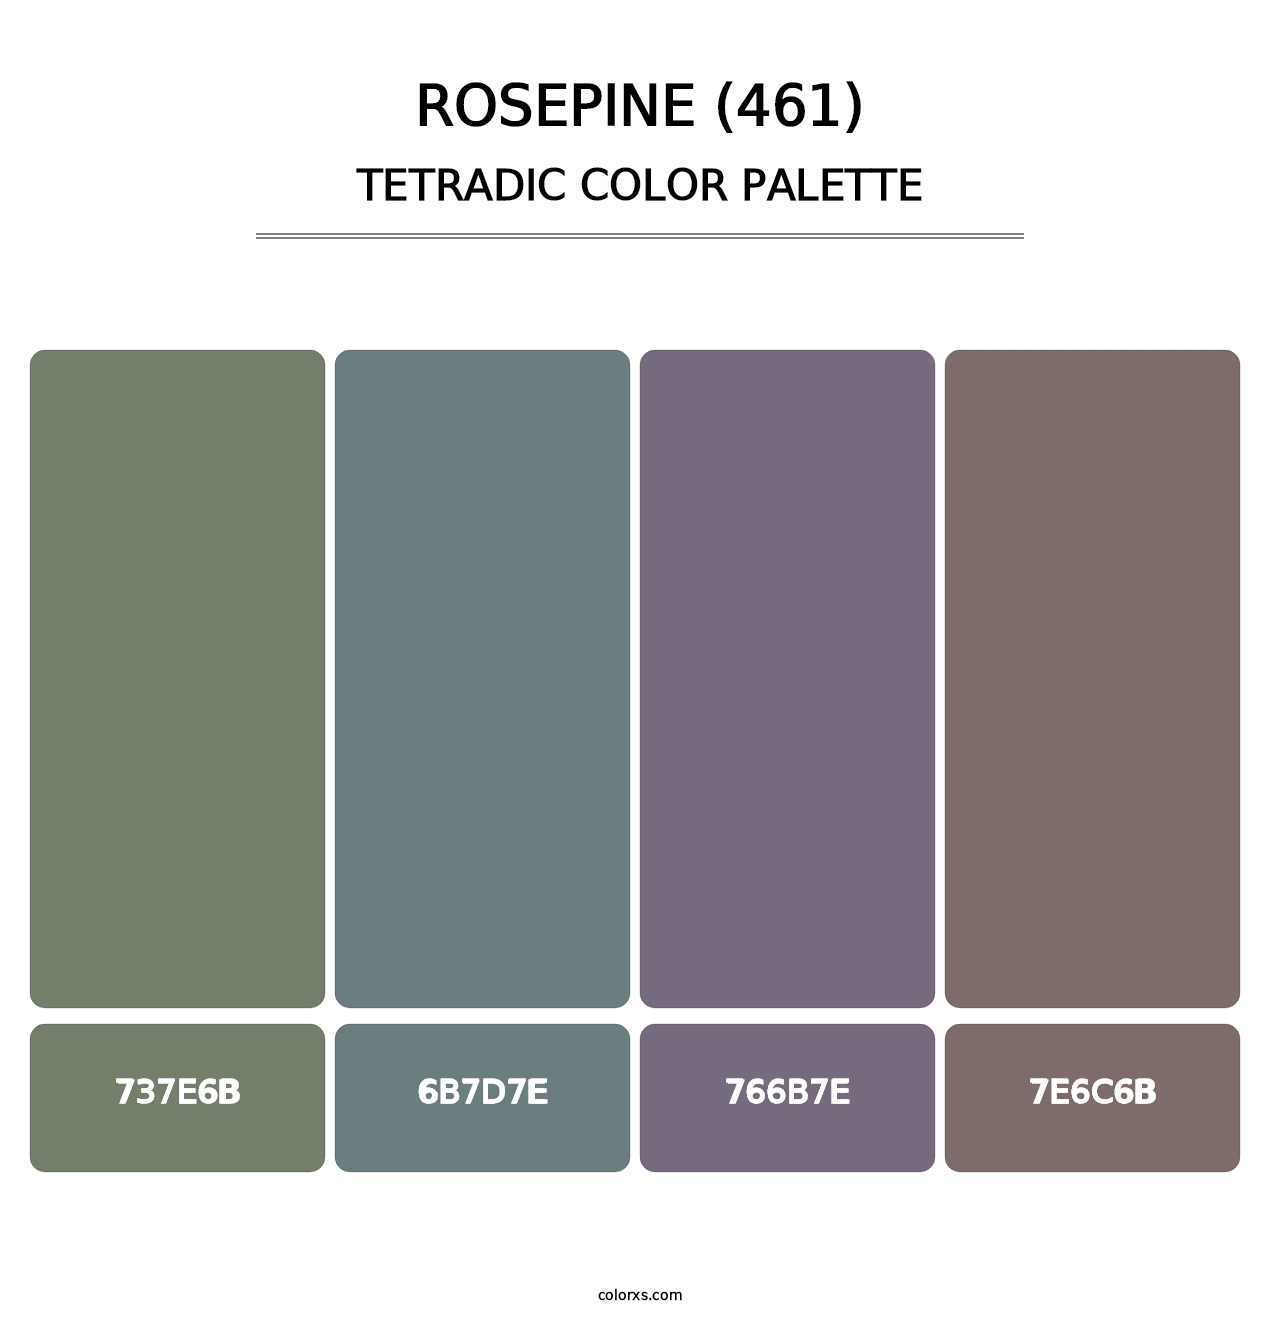 Rosepine (461) - Tetradic Color Palette